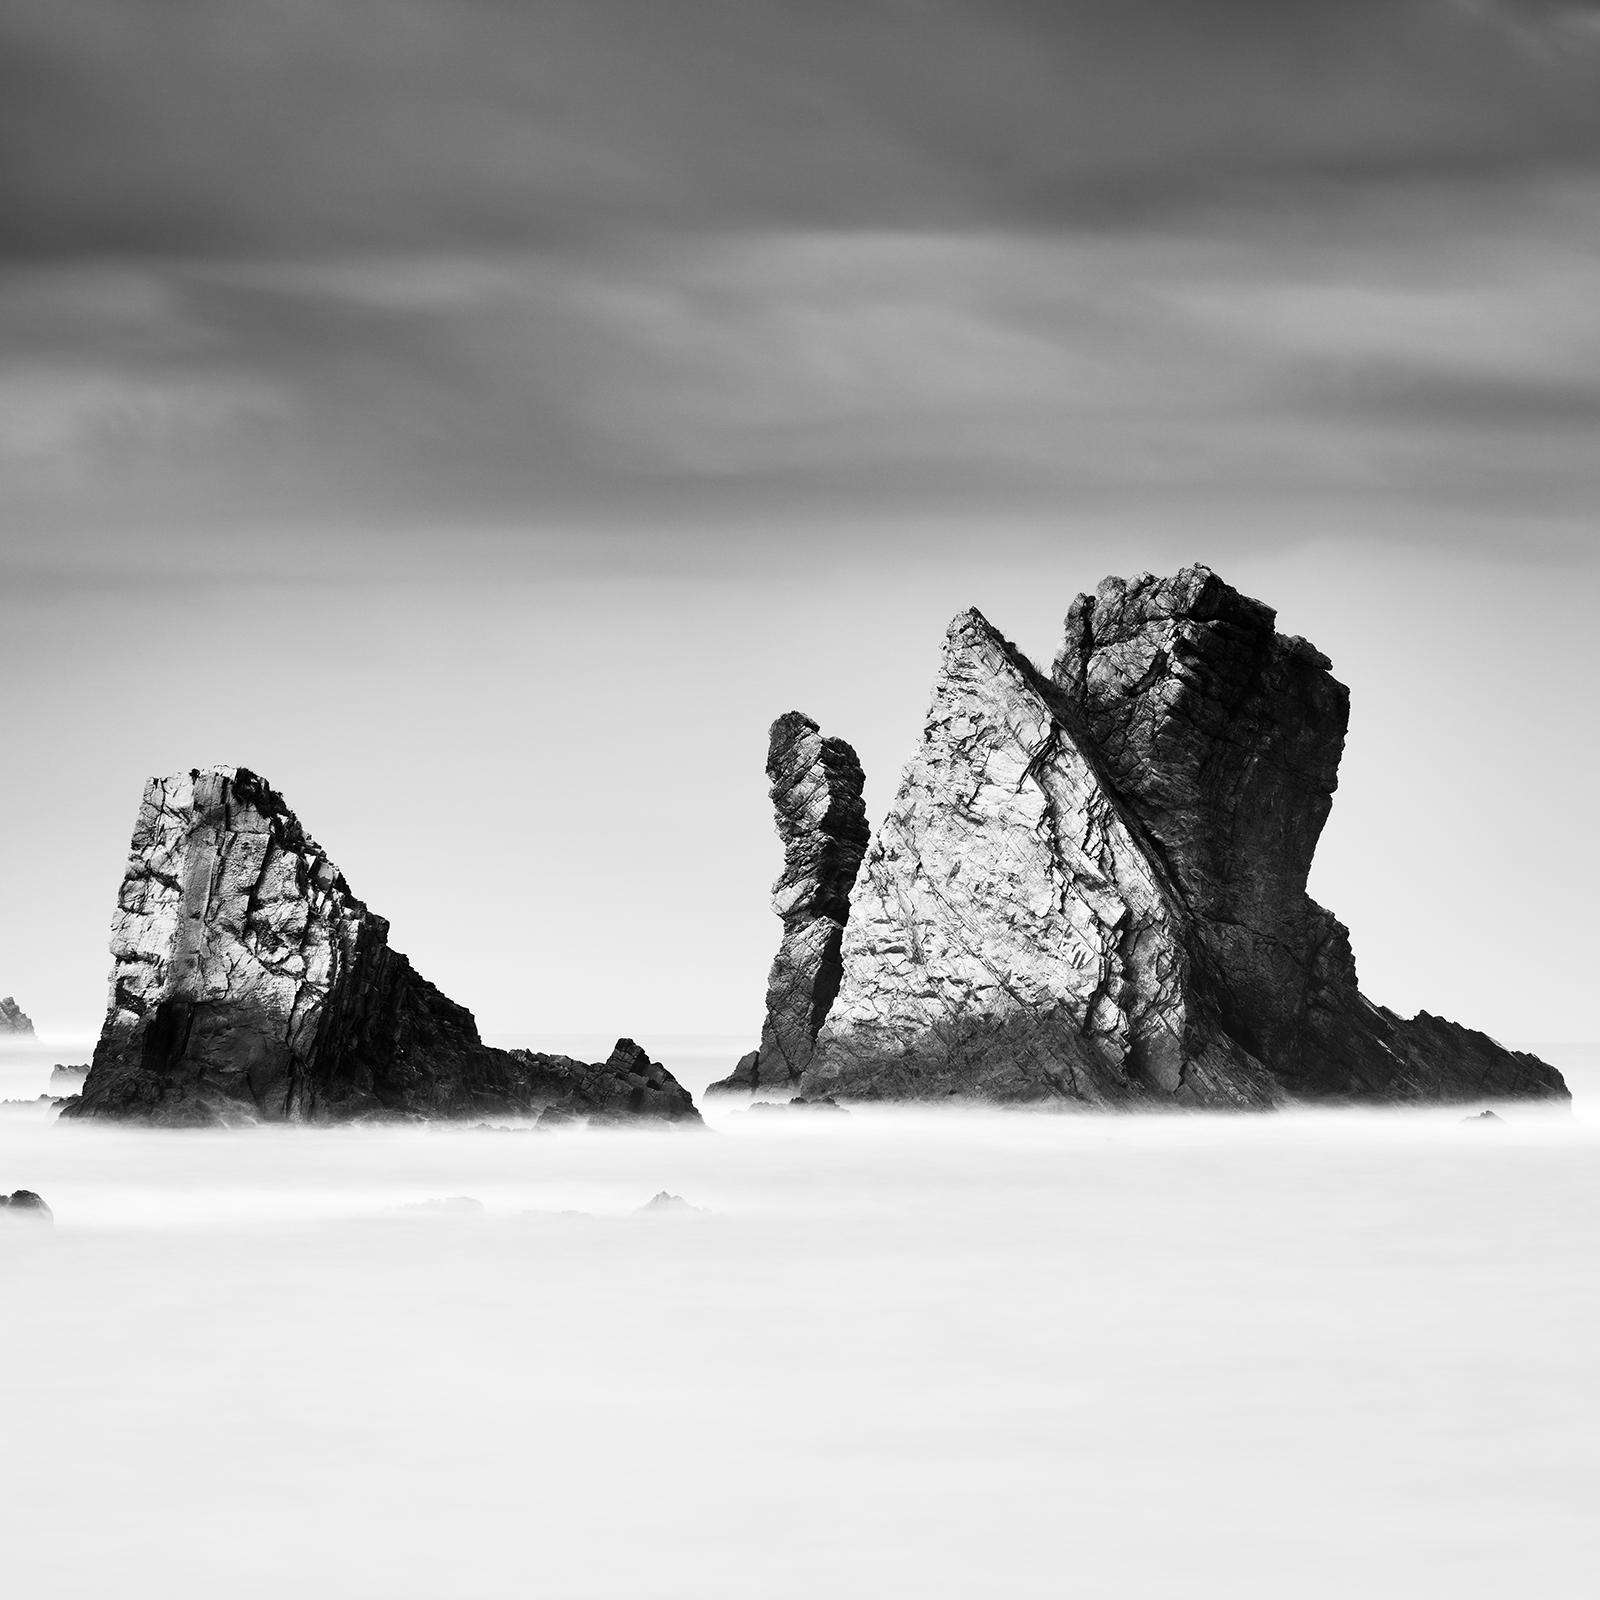 Beach of Silencio, giant Rocks, Atlantic Ocean, black and white landscape photo For Sale 4